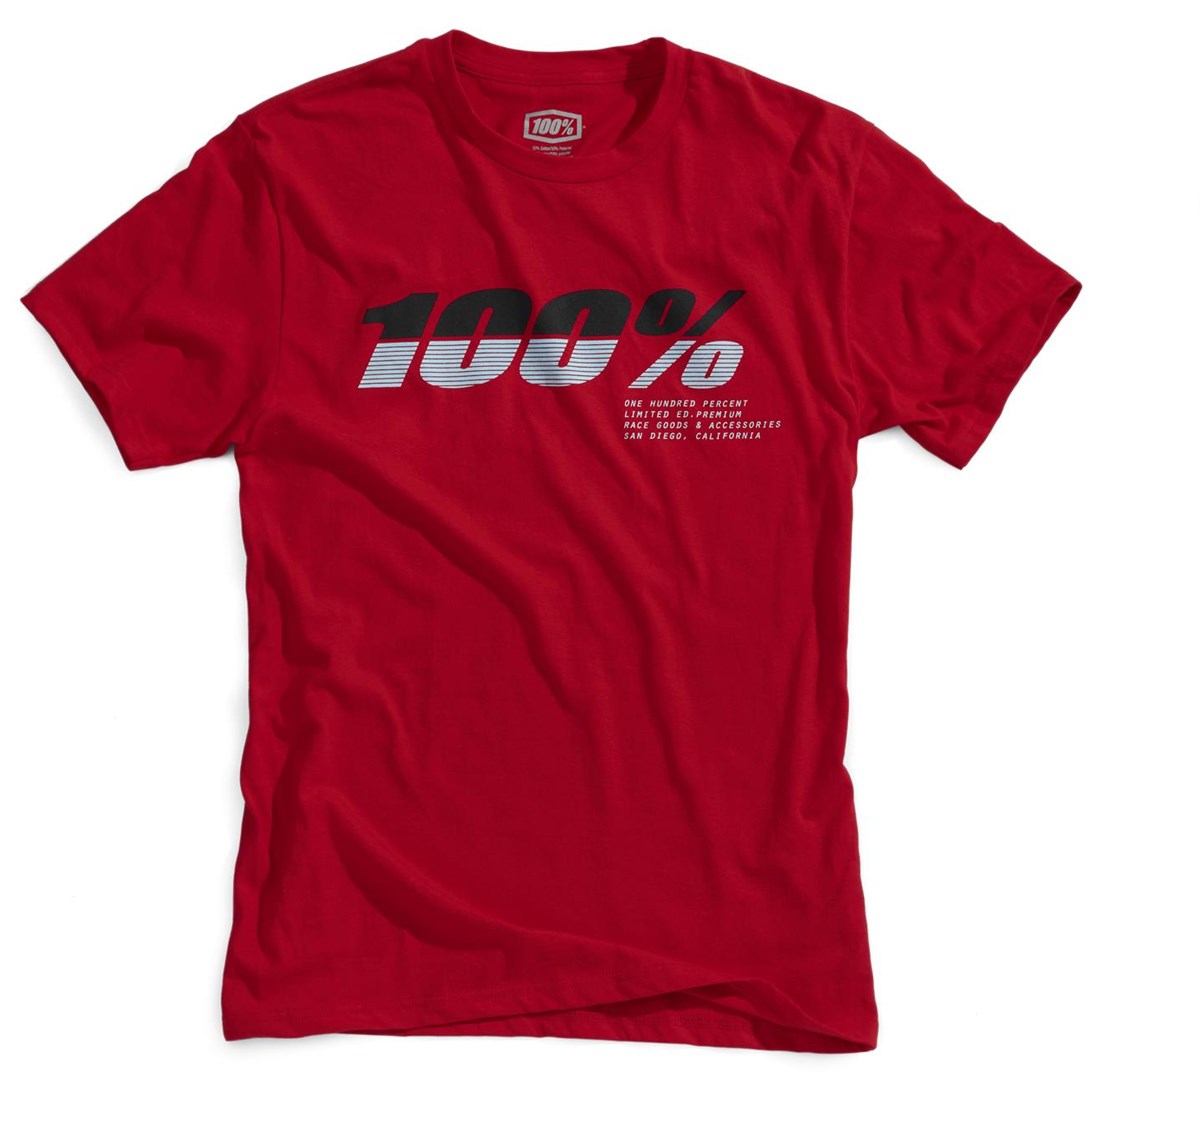 100% Bristol T-Shirt product image